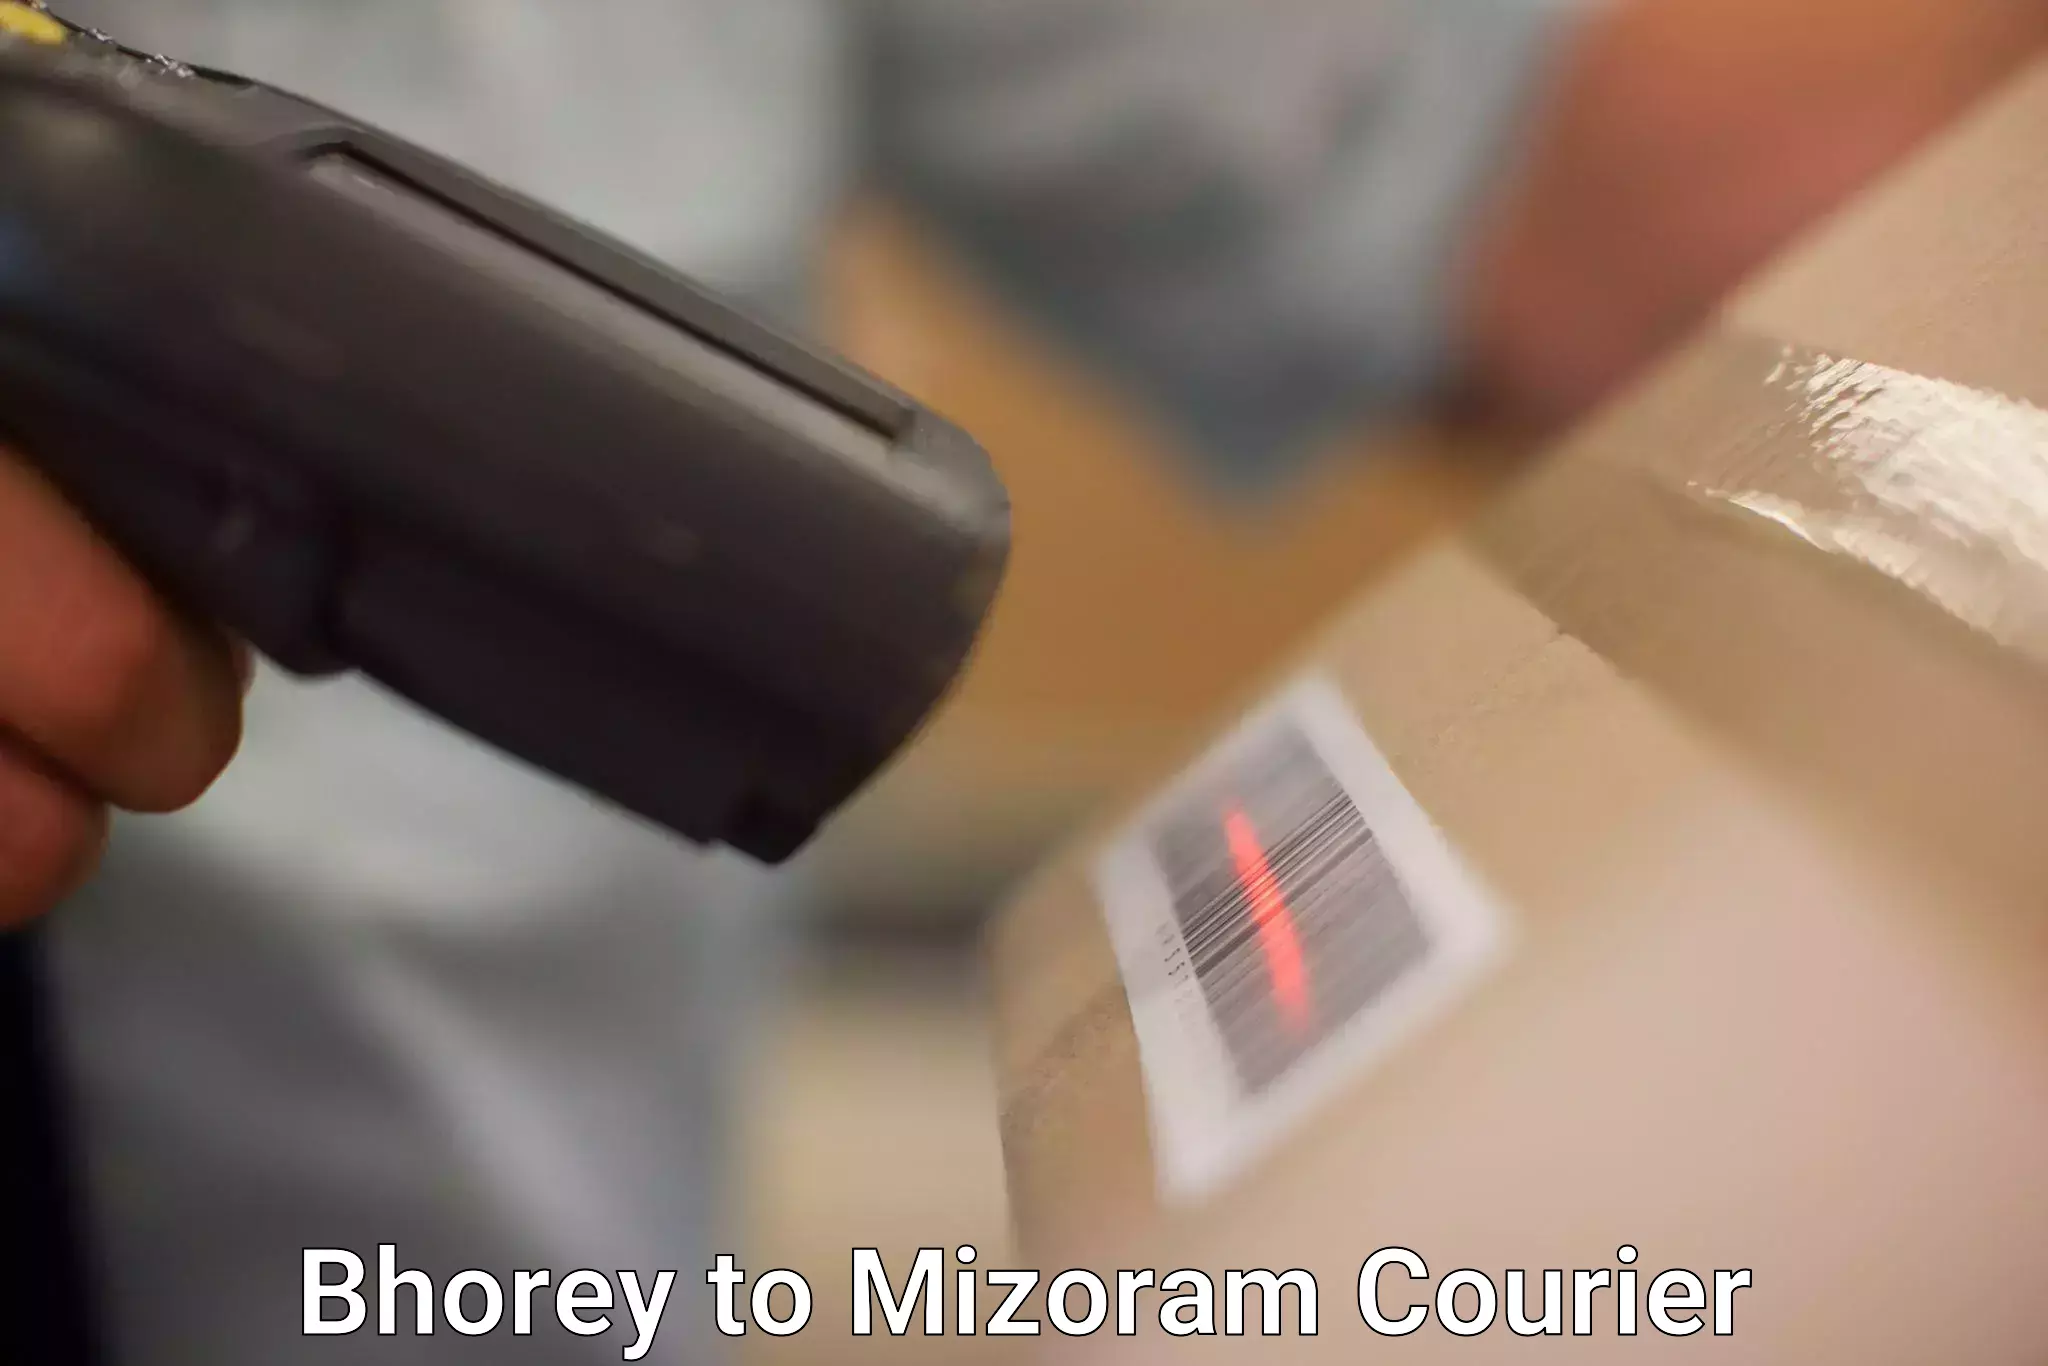 Express delivery network Bhorey to Mizoram